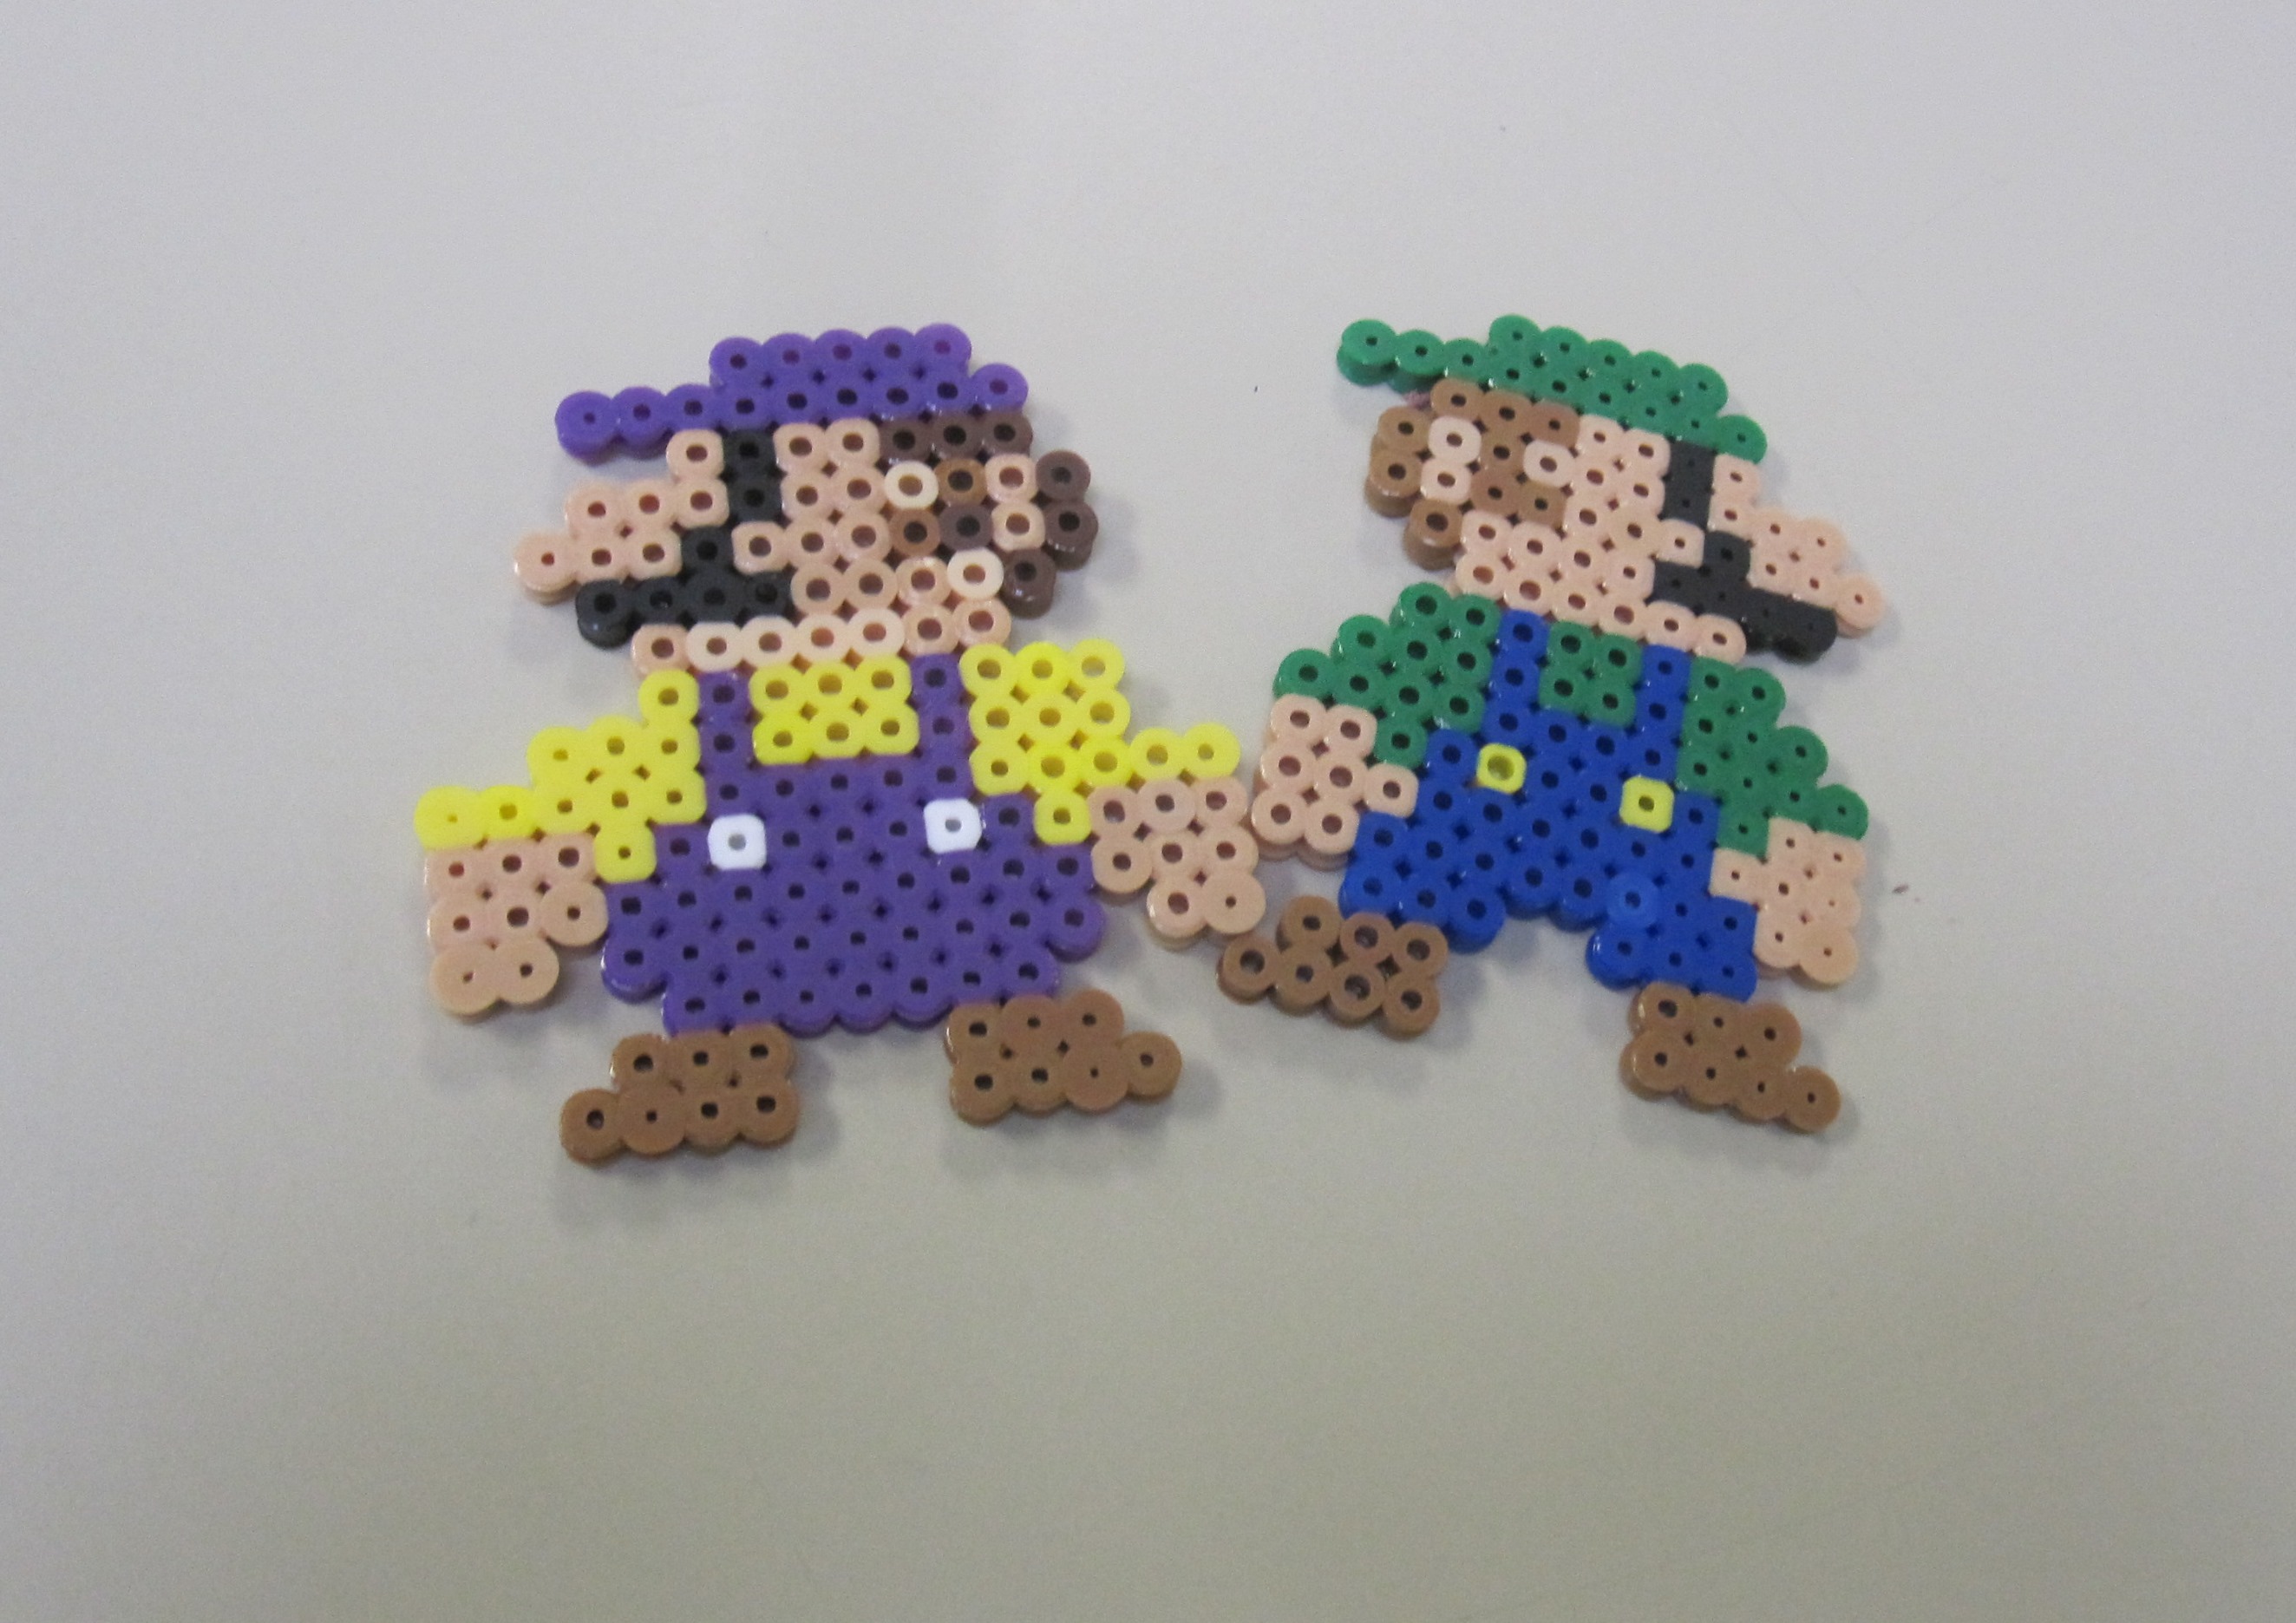 Wario & Luigi made out of perler beads.